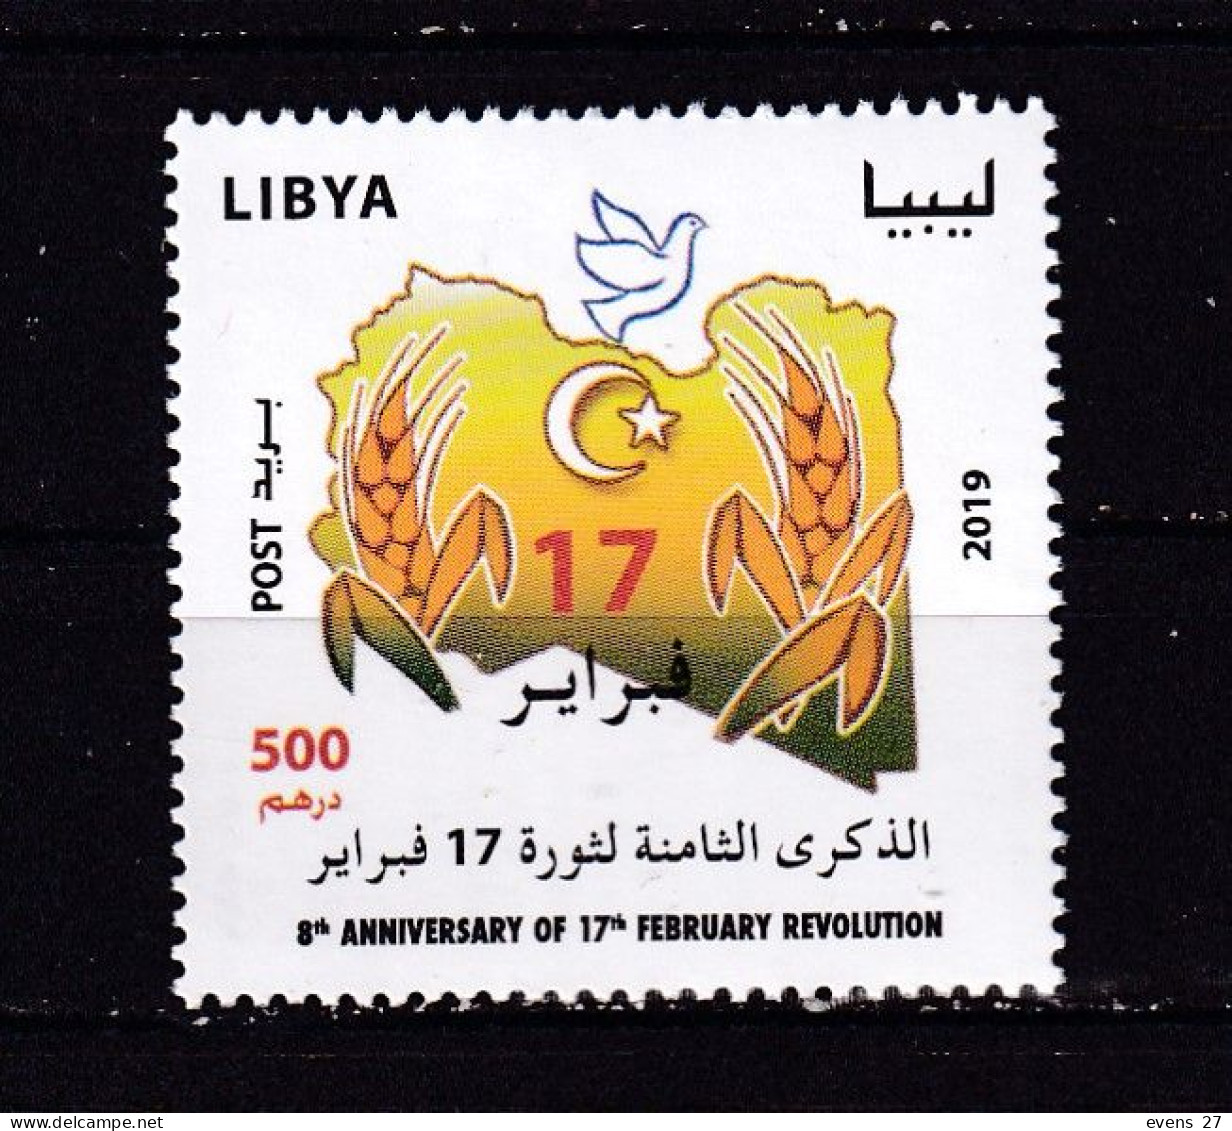 LIBYA-2019-8th ANNIVERSARY OF REVOLUTION-MNH. - Unused Stamps